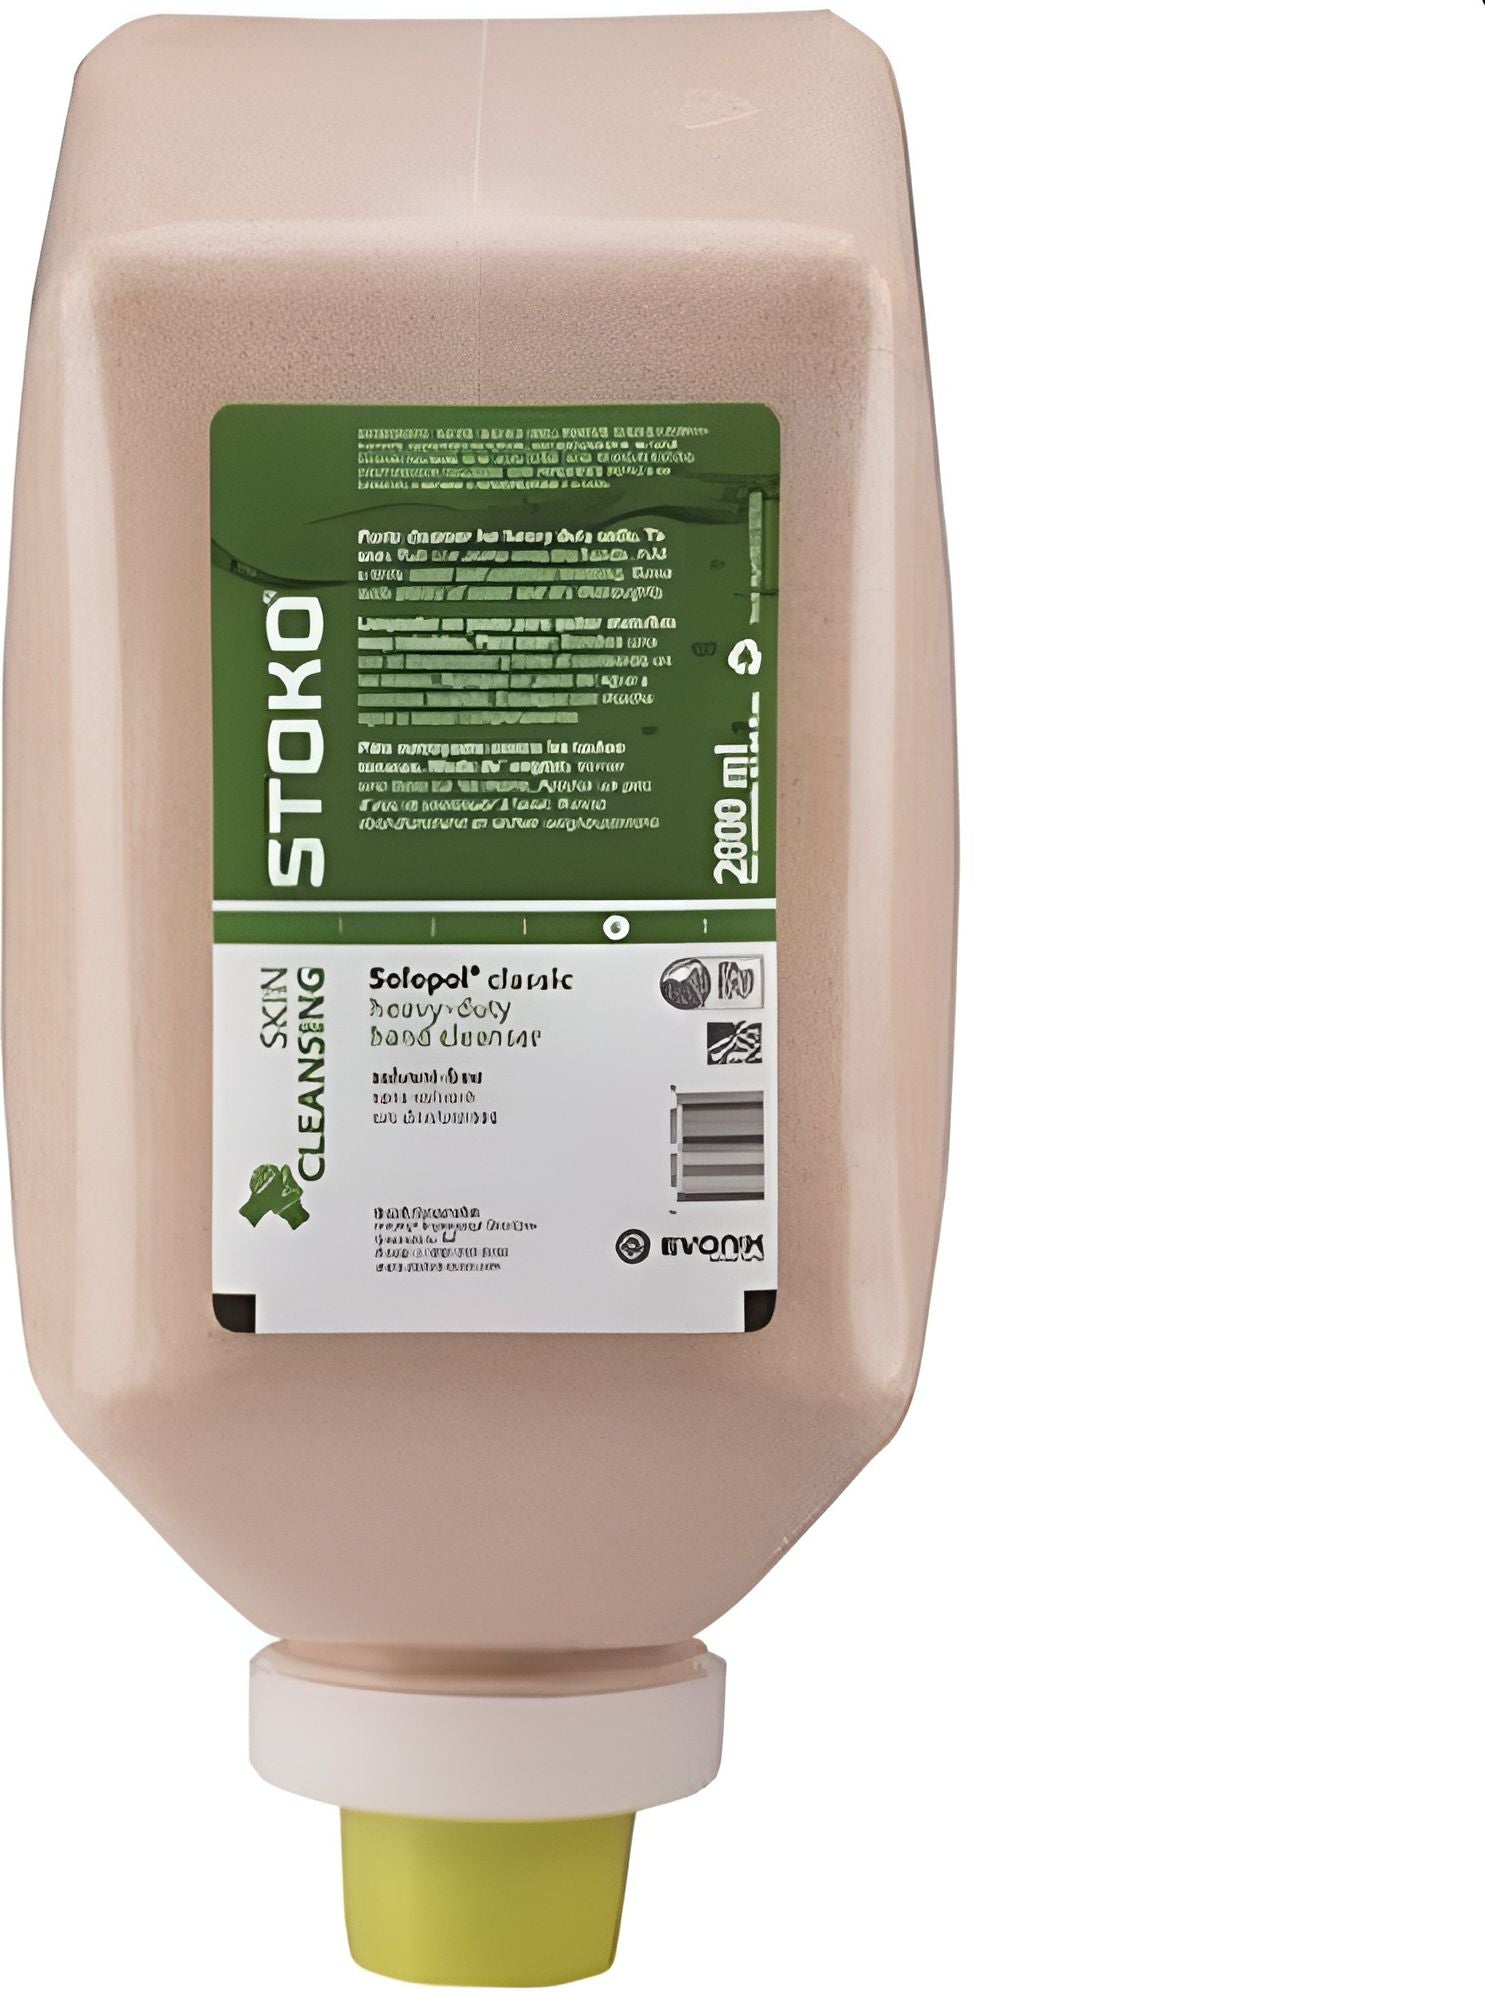 Deb Group - Stoko Solopol Classic Hand Cleaner Antibacterial, 2000 ml Per Bottle - 98318706